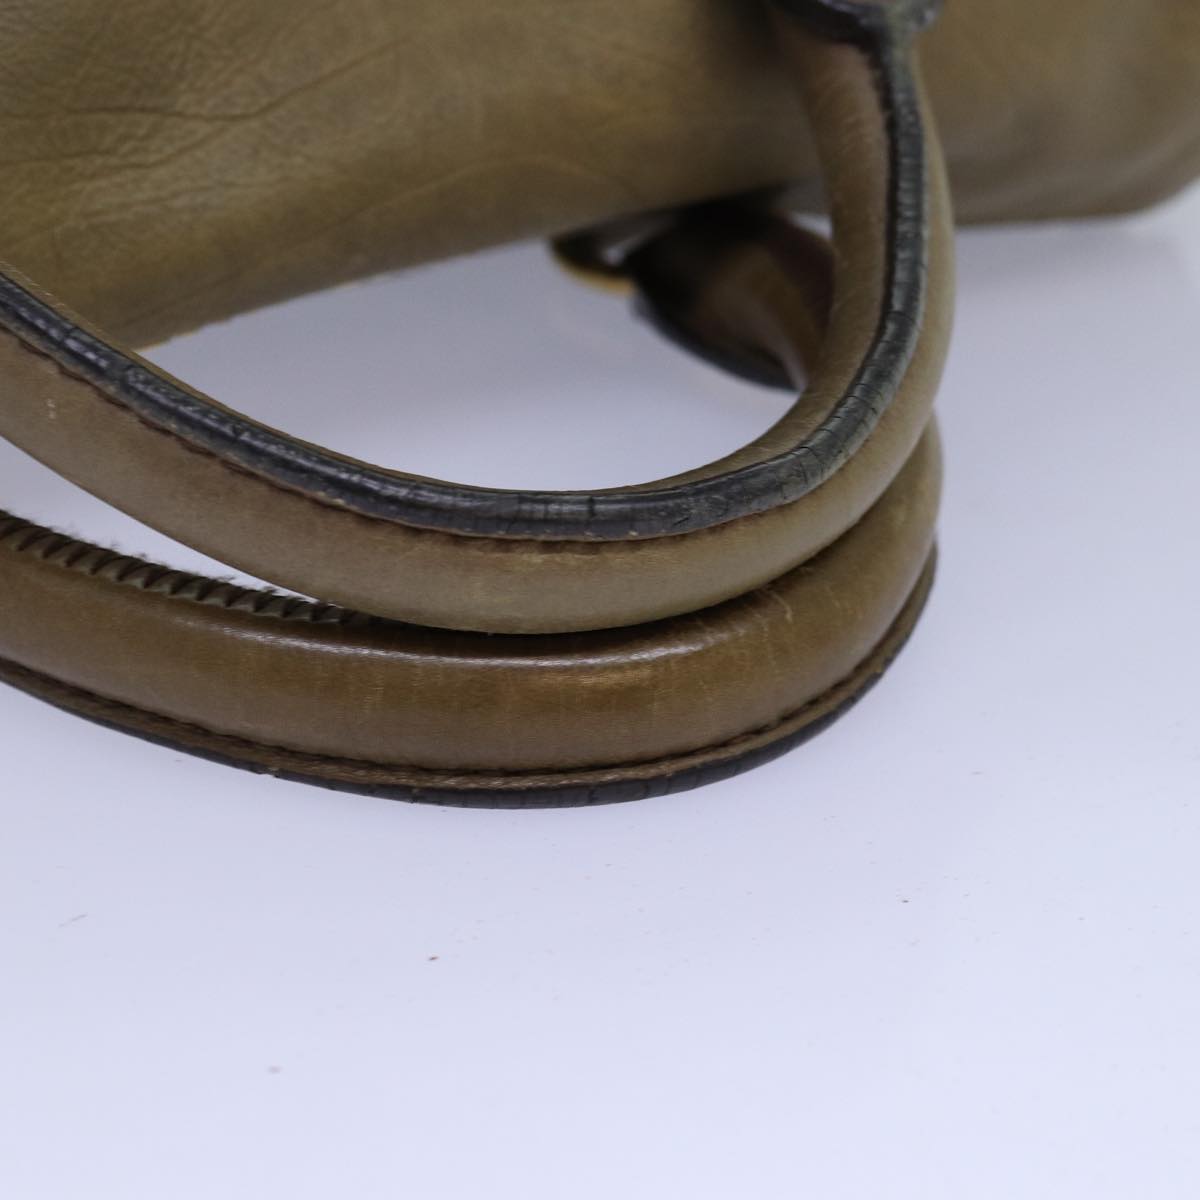 Miu Miu Hand Bag Leather 2way Beige Auth bs14781